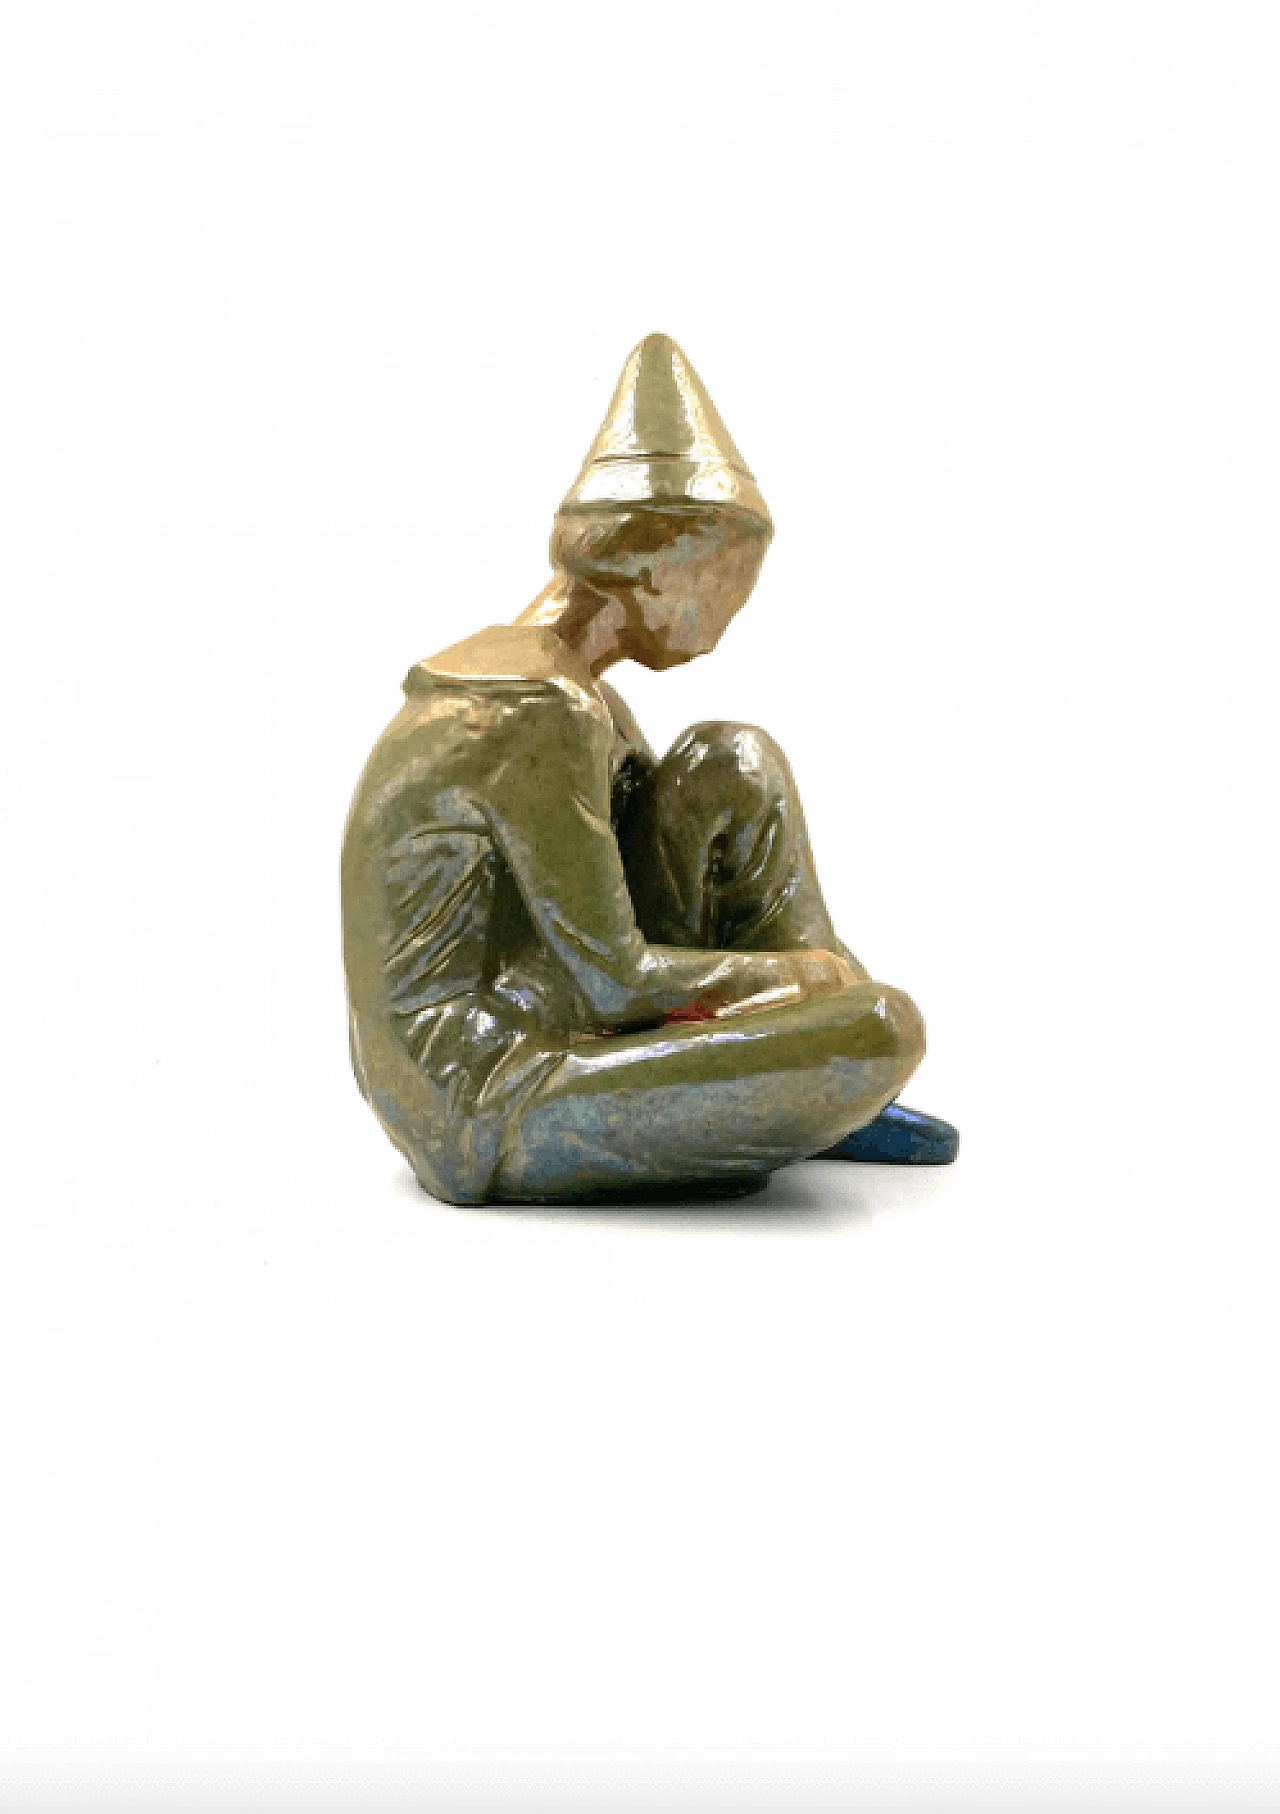 Giordano Tronconi, Seated boy, green ceramic figure from Faenza, 1950s 59